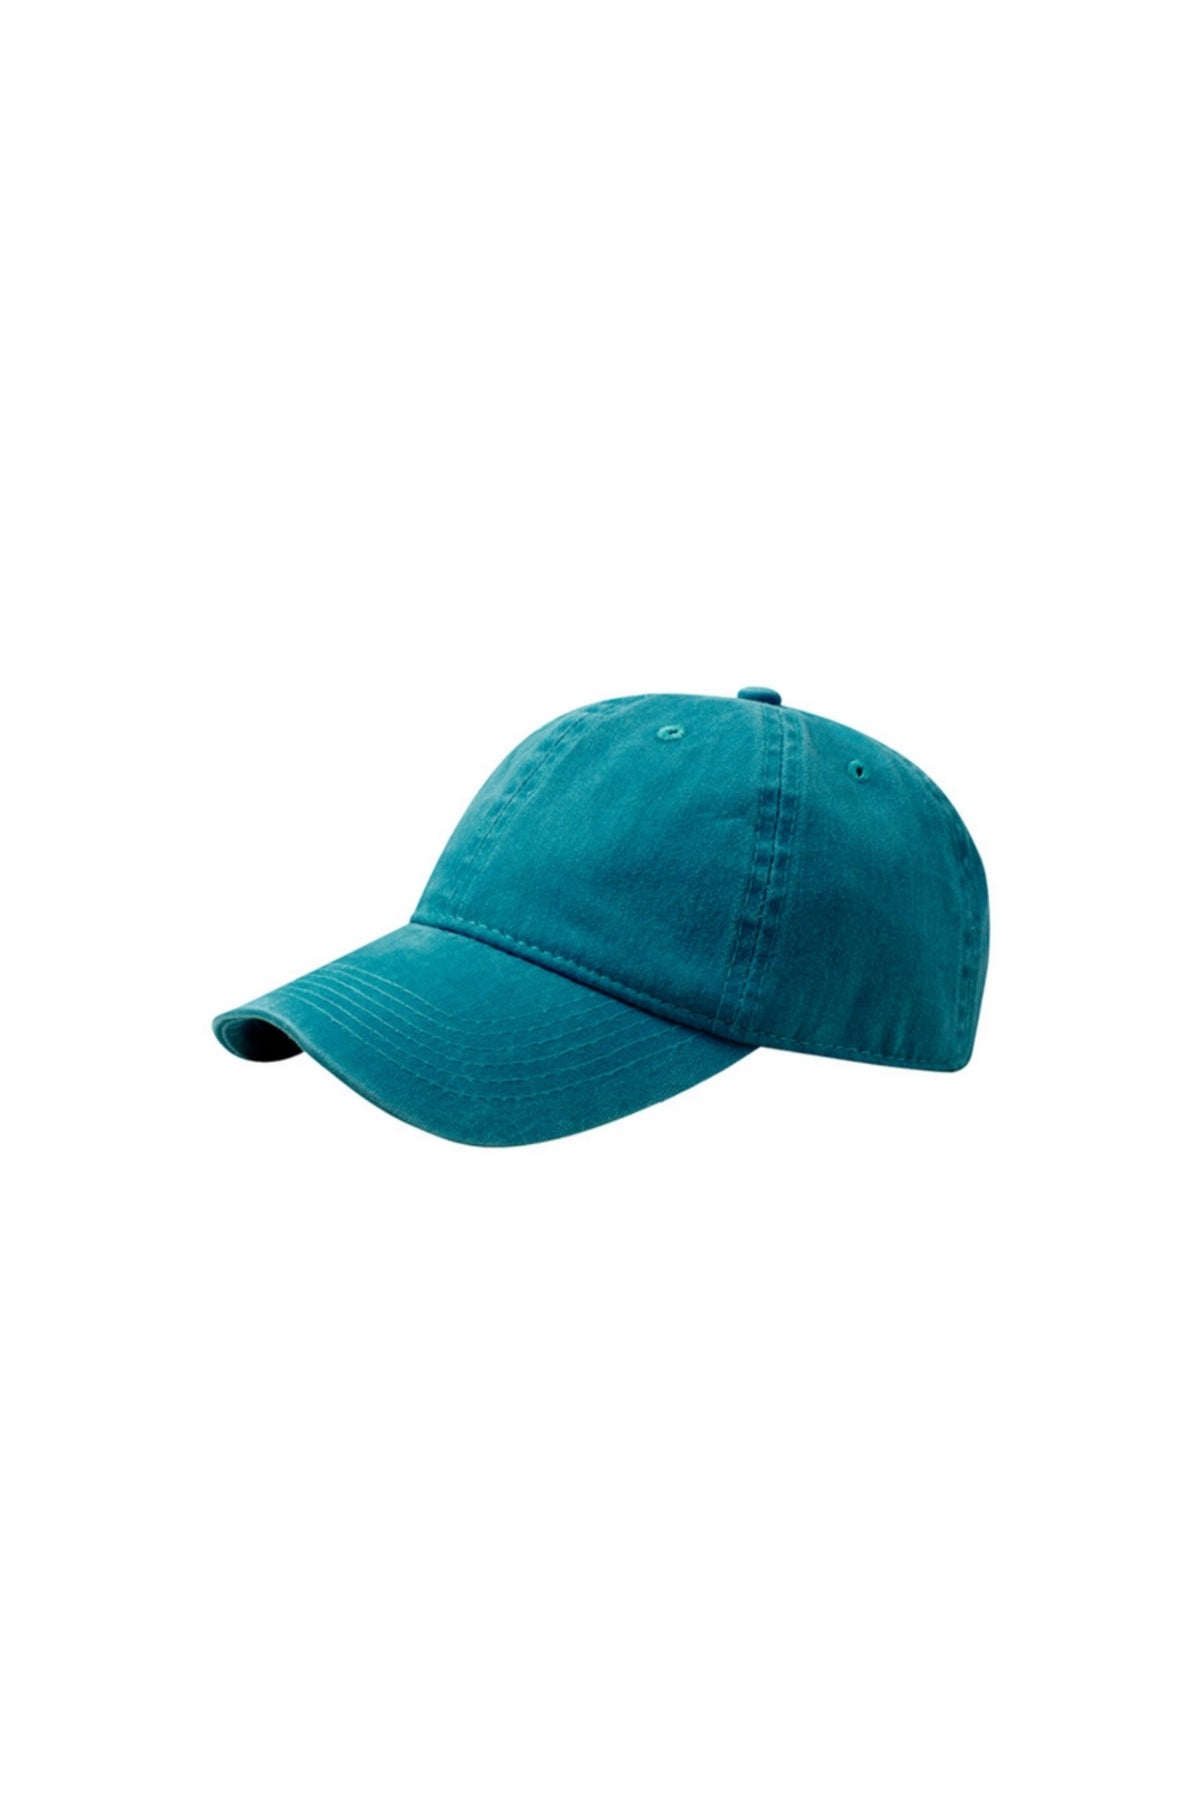 Teal blue washed cap